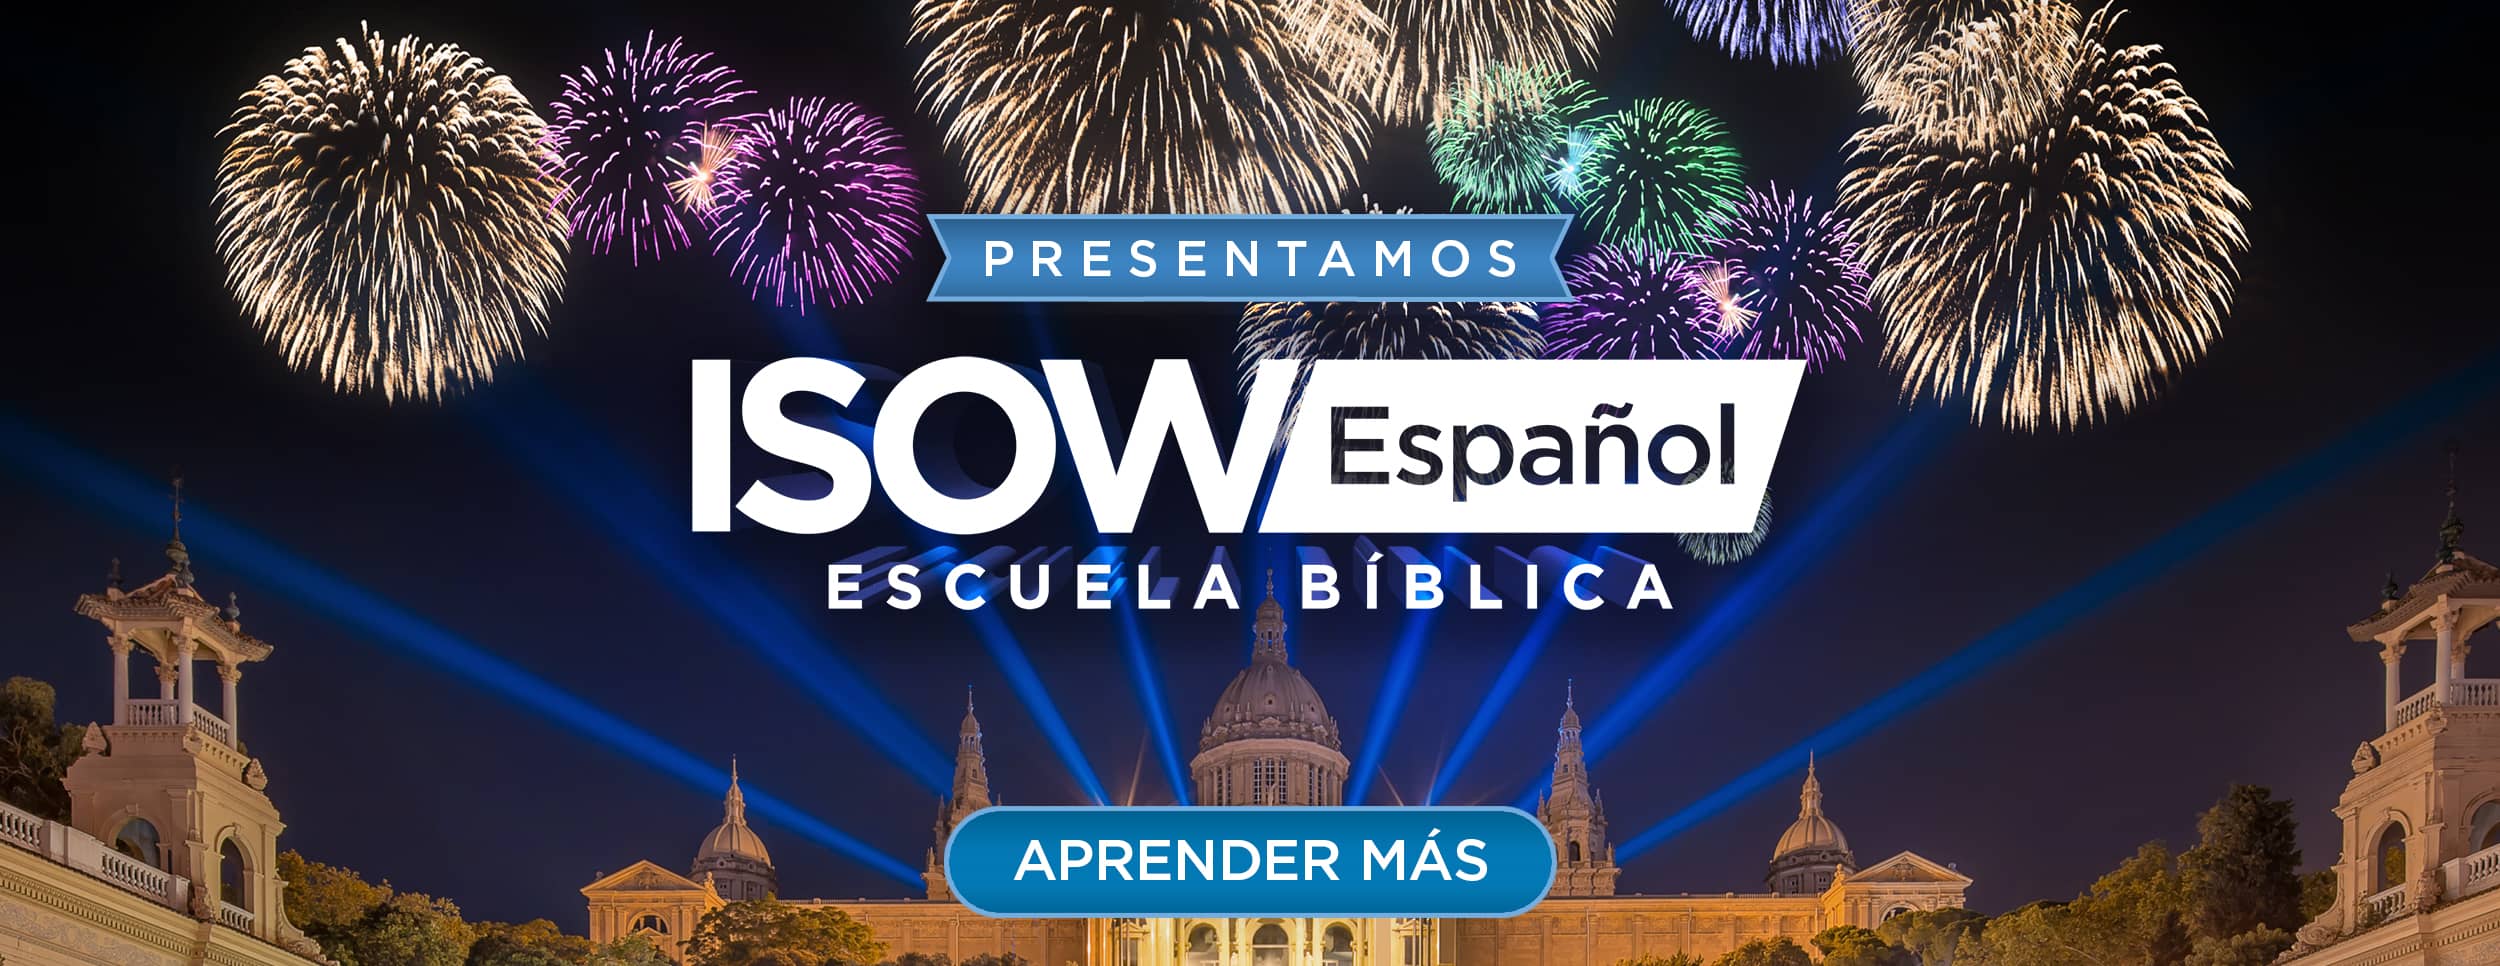 Presentamos ISOW Espanol – Website Banner